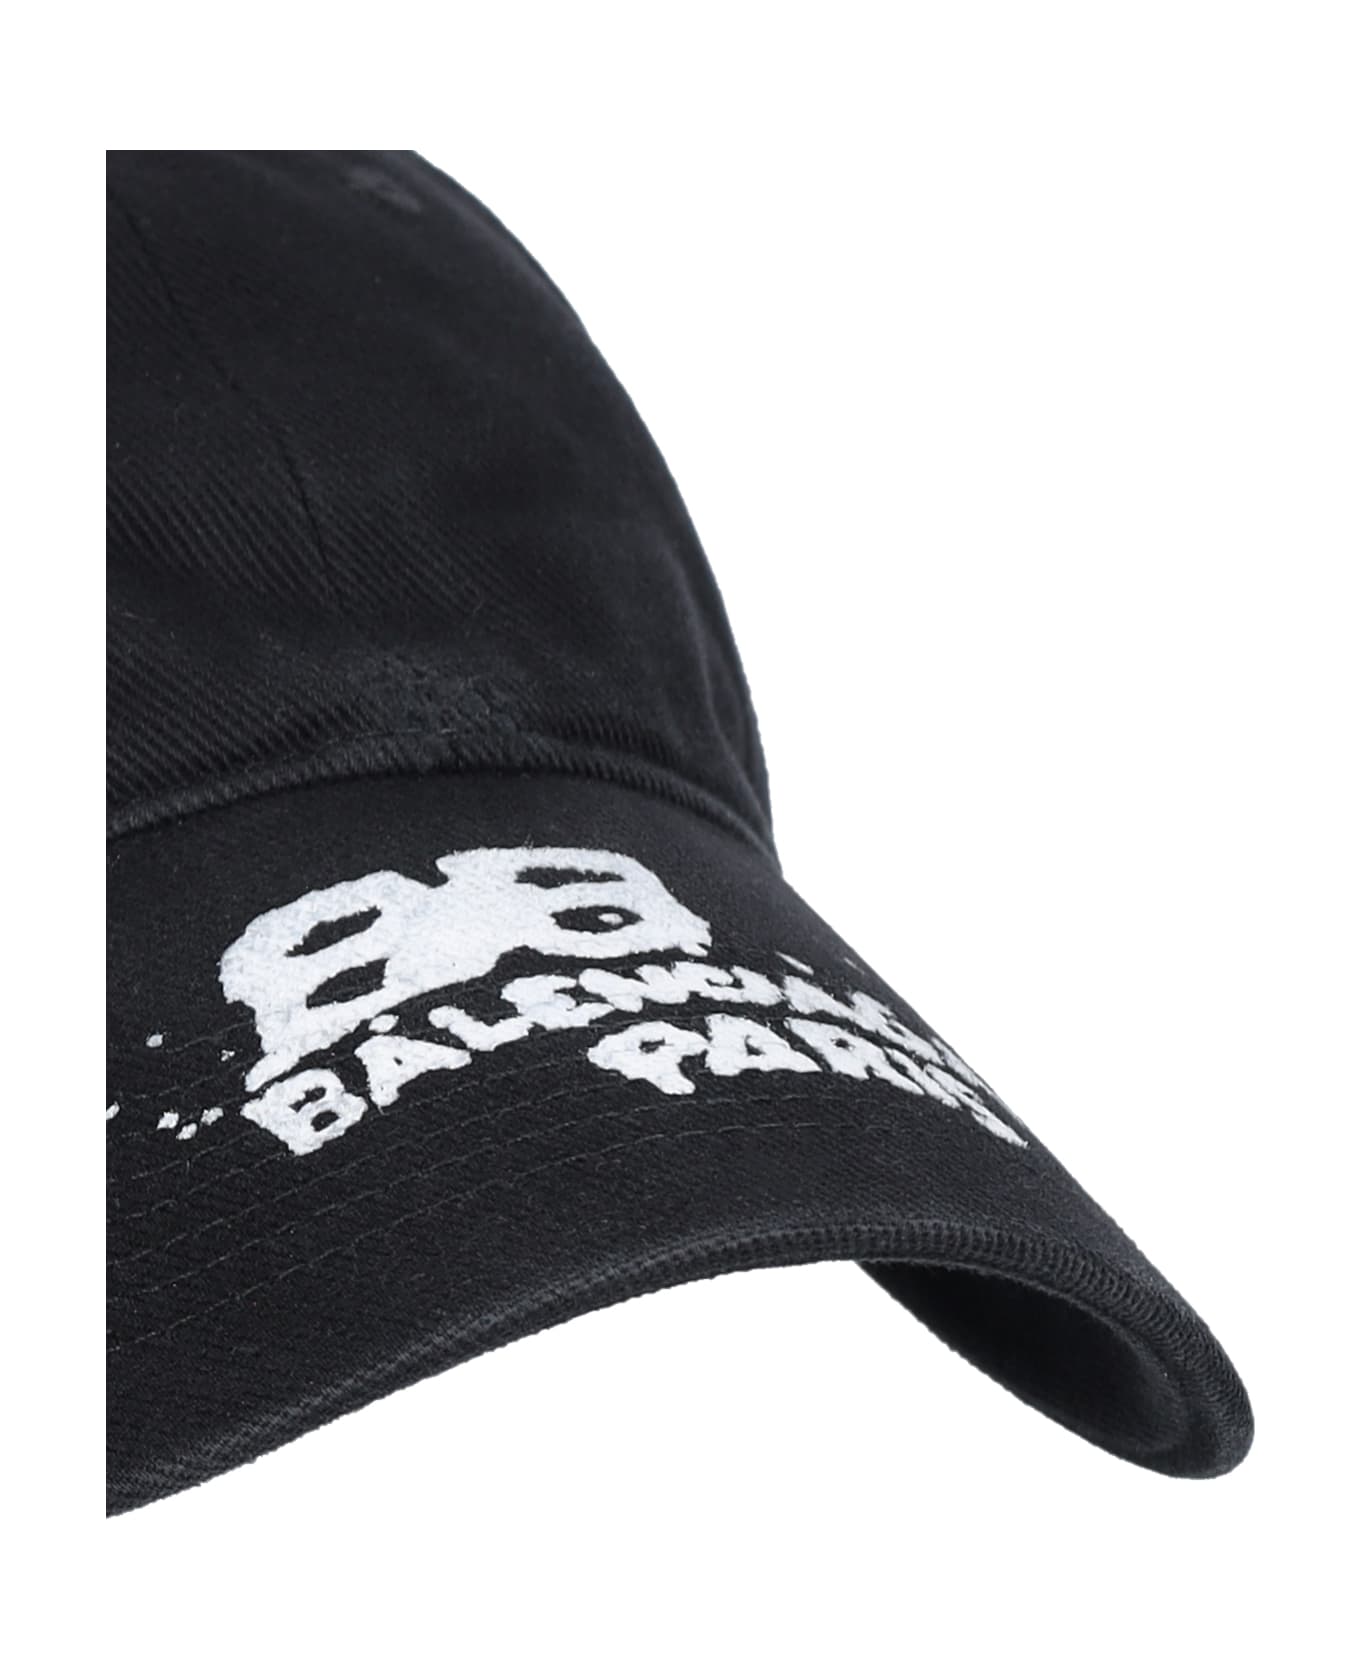 Balenciaga Hats - Black 帽子